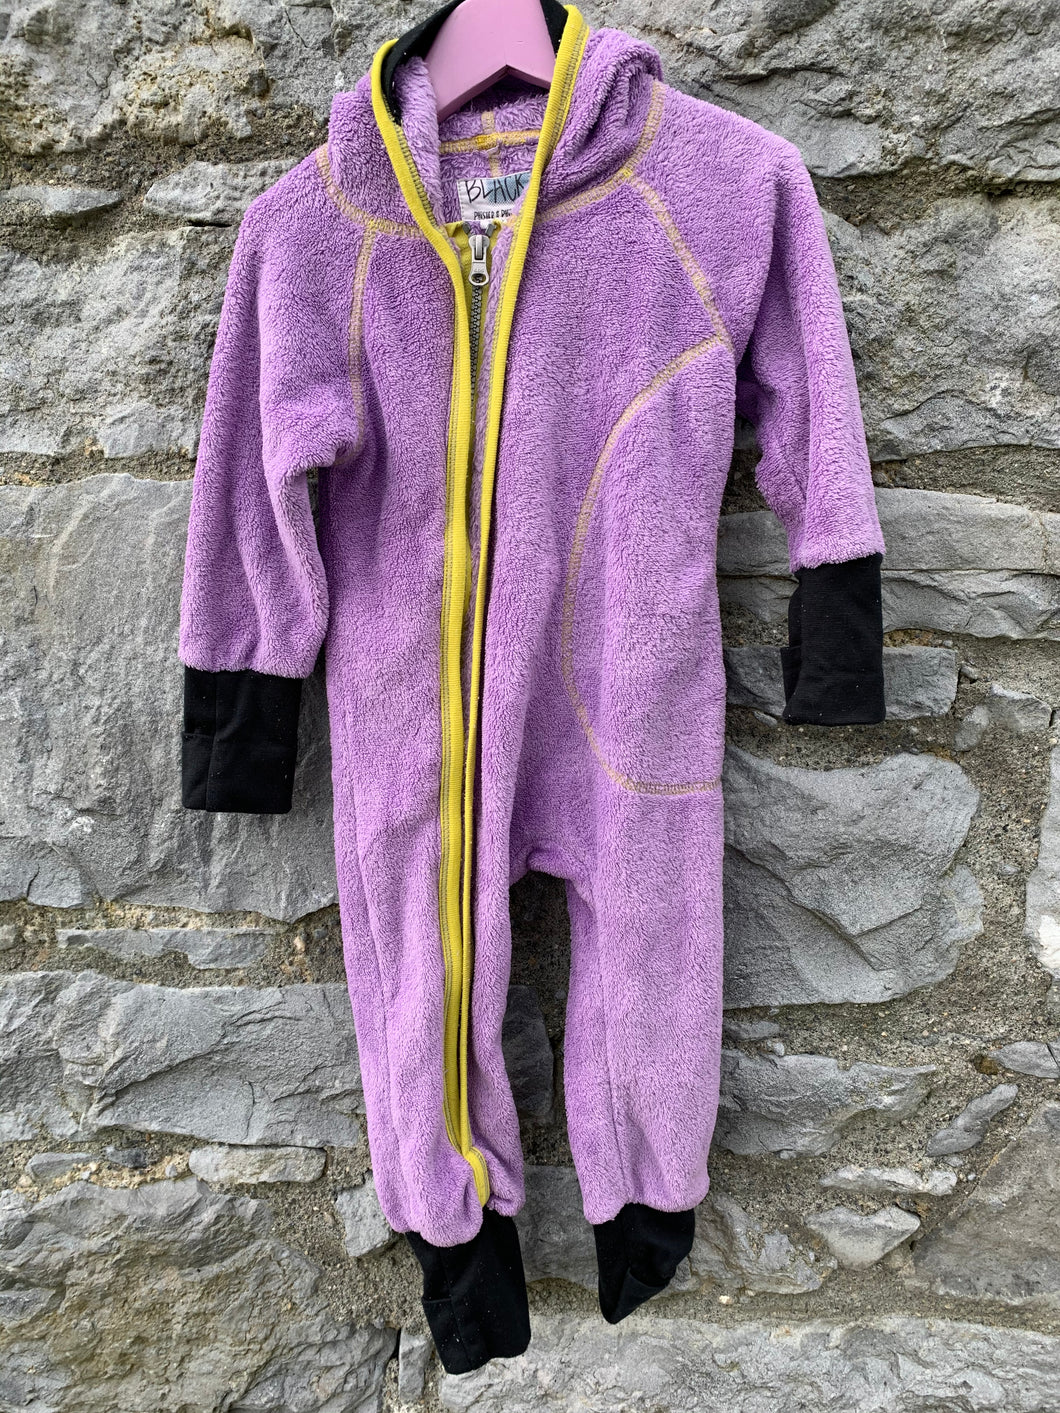 Purple pixie onesie   18m (86cm)